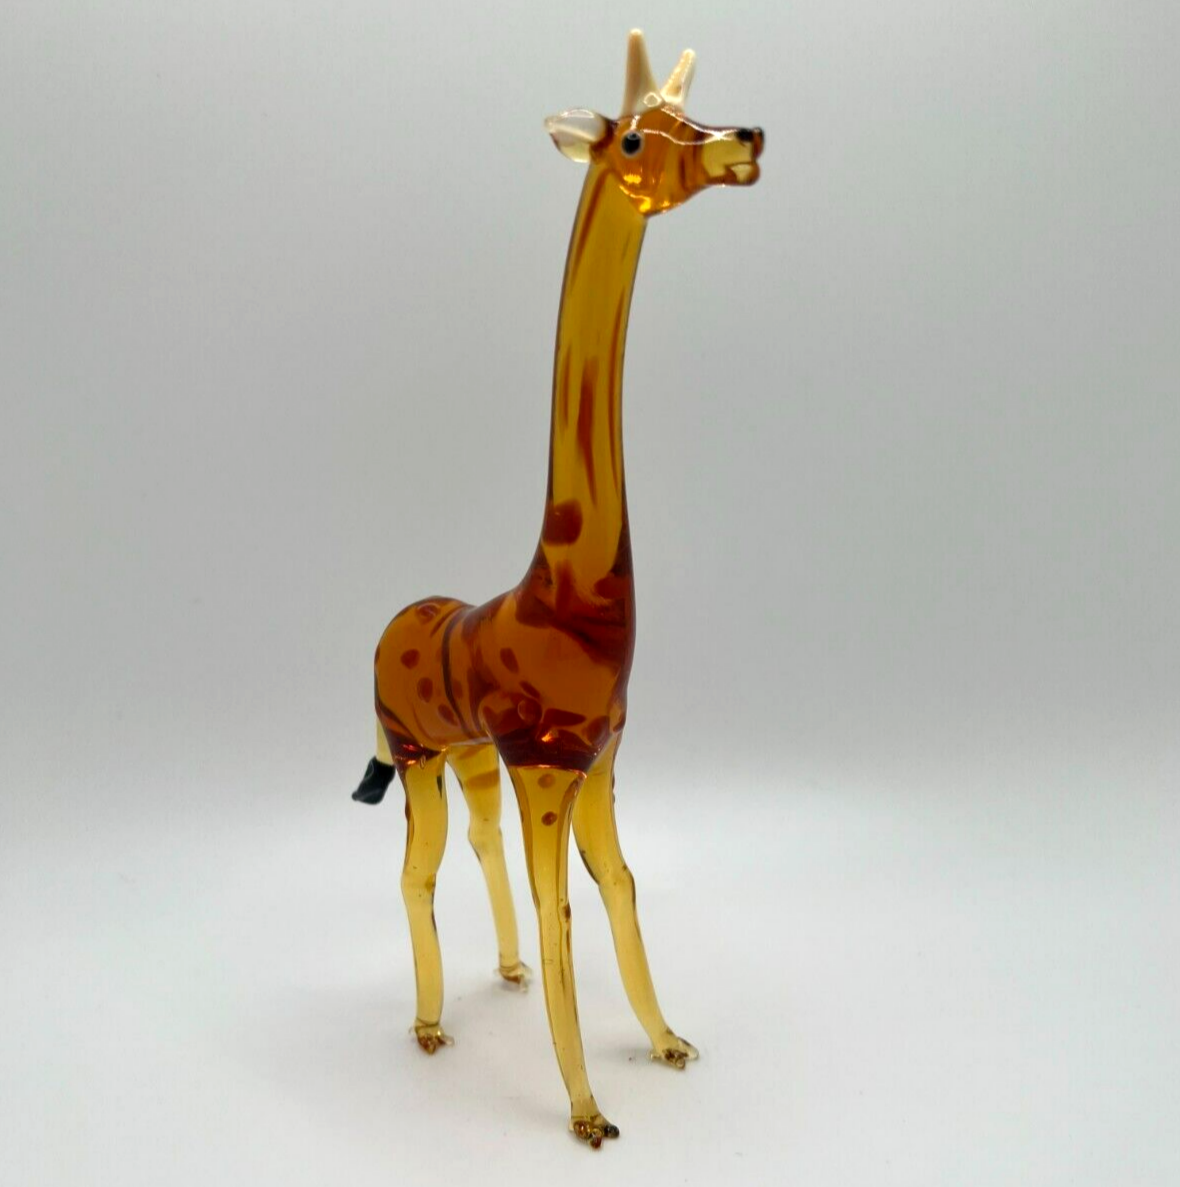 Primary image for New Collection! Murano Glass Handcrafted Unique Custom Designed Giraffe Figurine